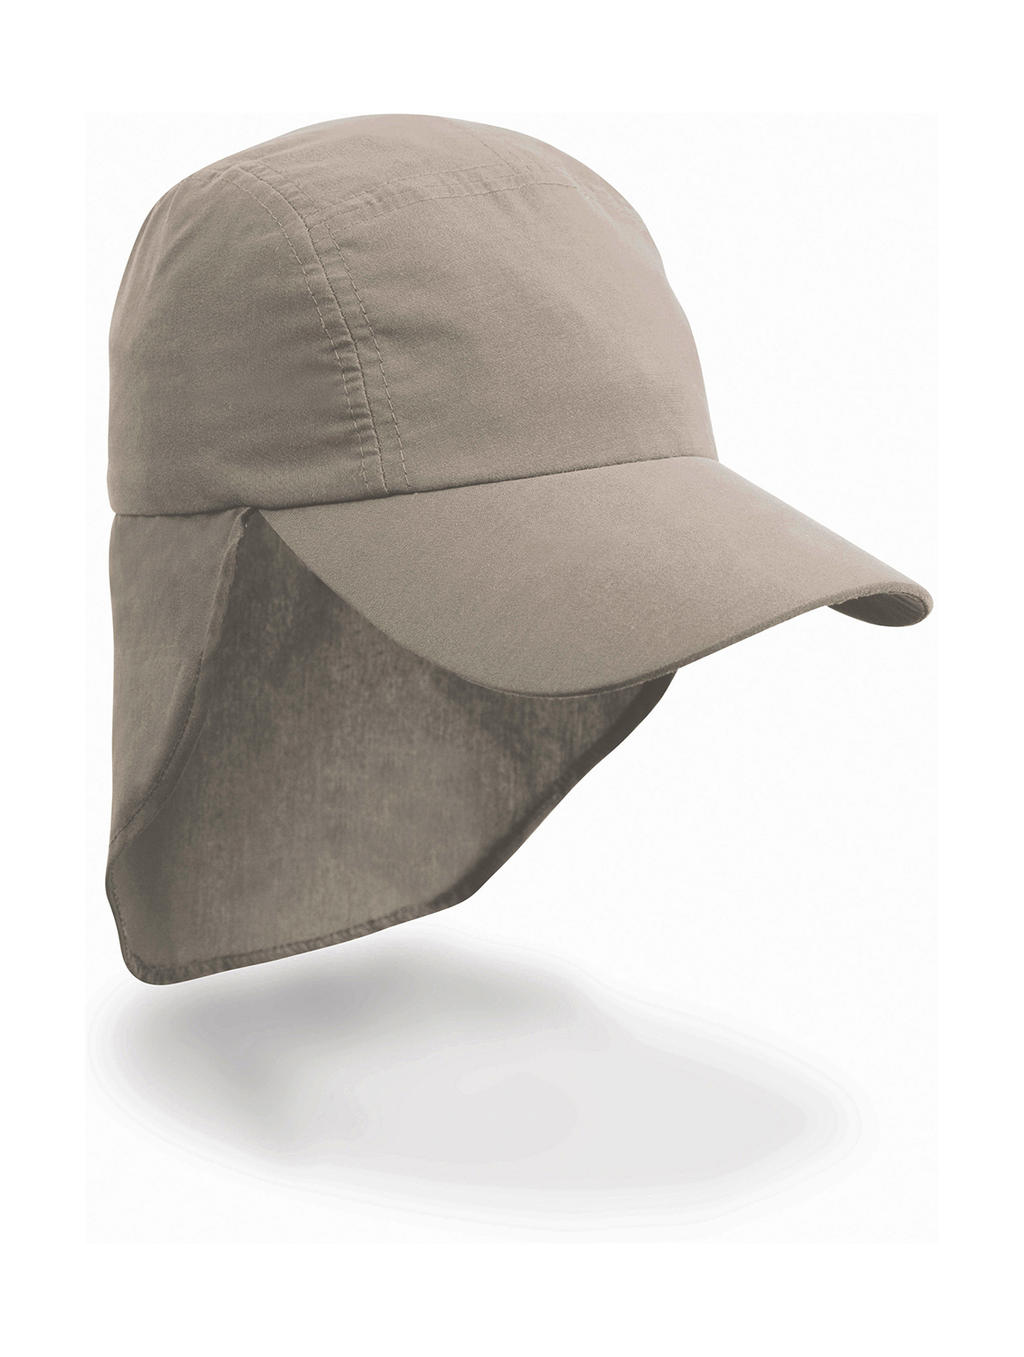  Ulti Legionnaire Cap in Farbe Desert Khaki